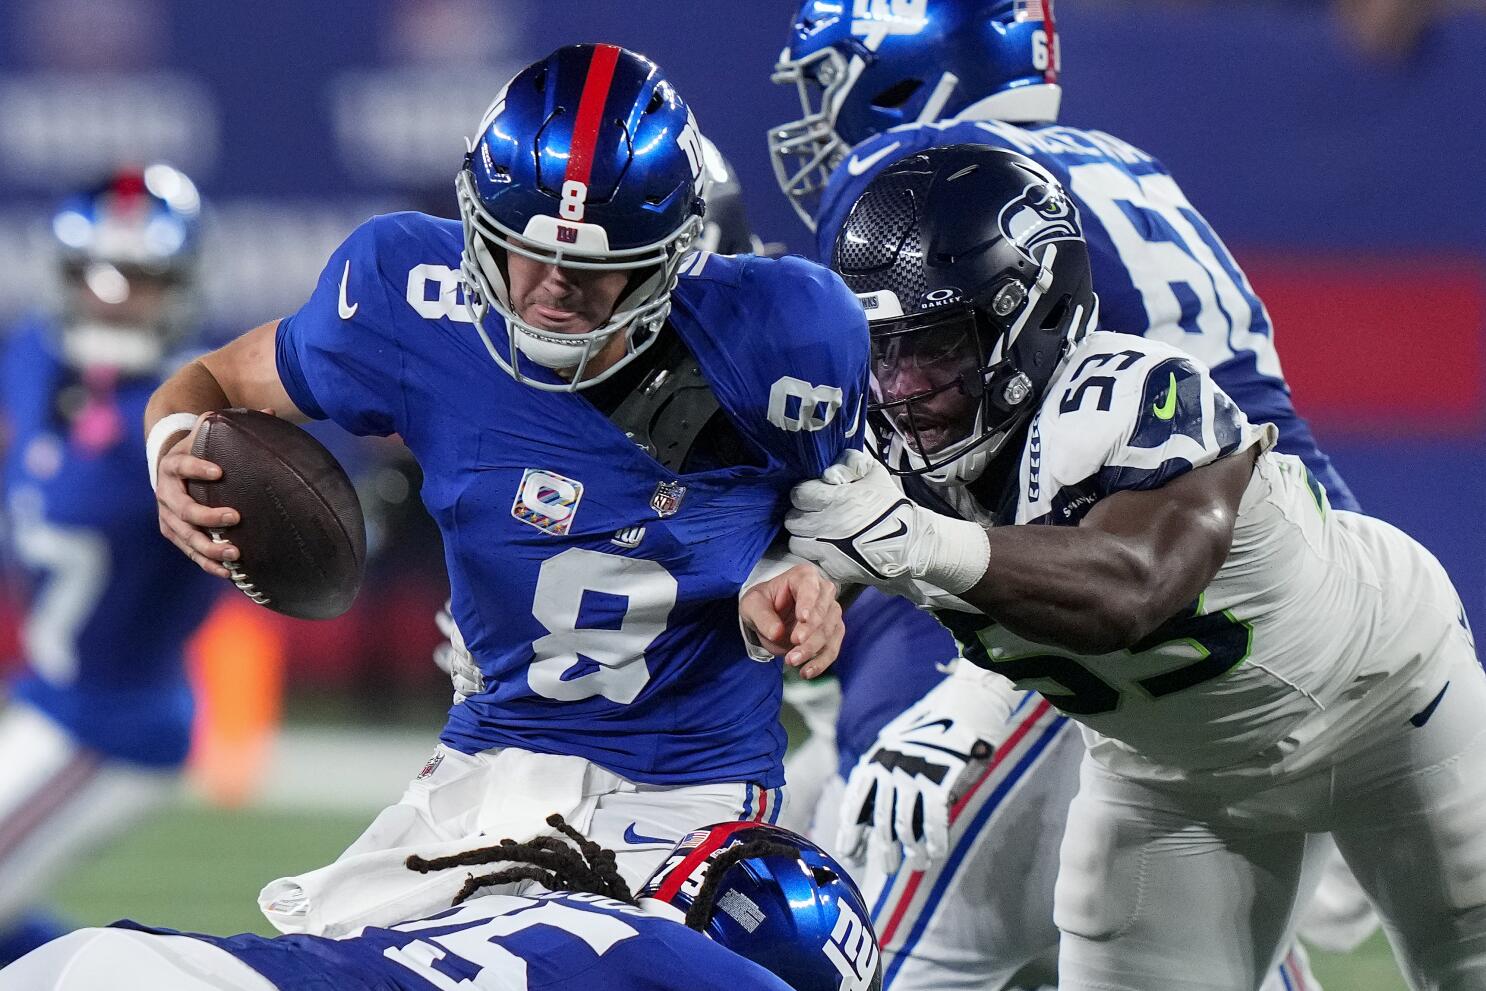 Monday Night Football Week 4 Picks: Seattle Seahawks at New York Giants -  Mile High Report